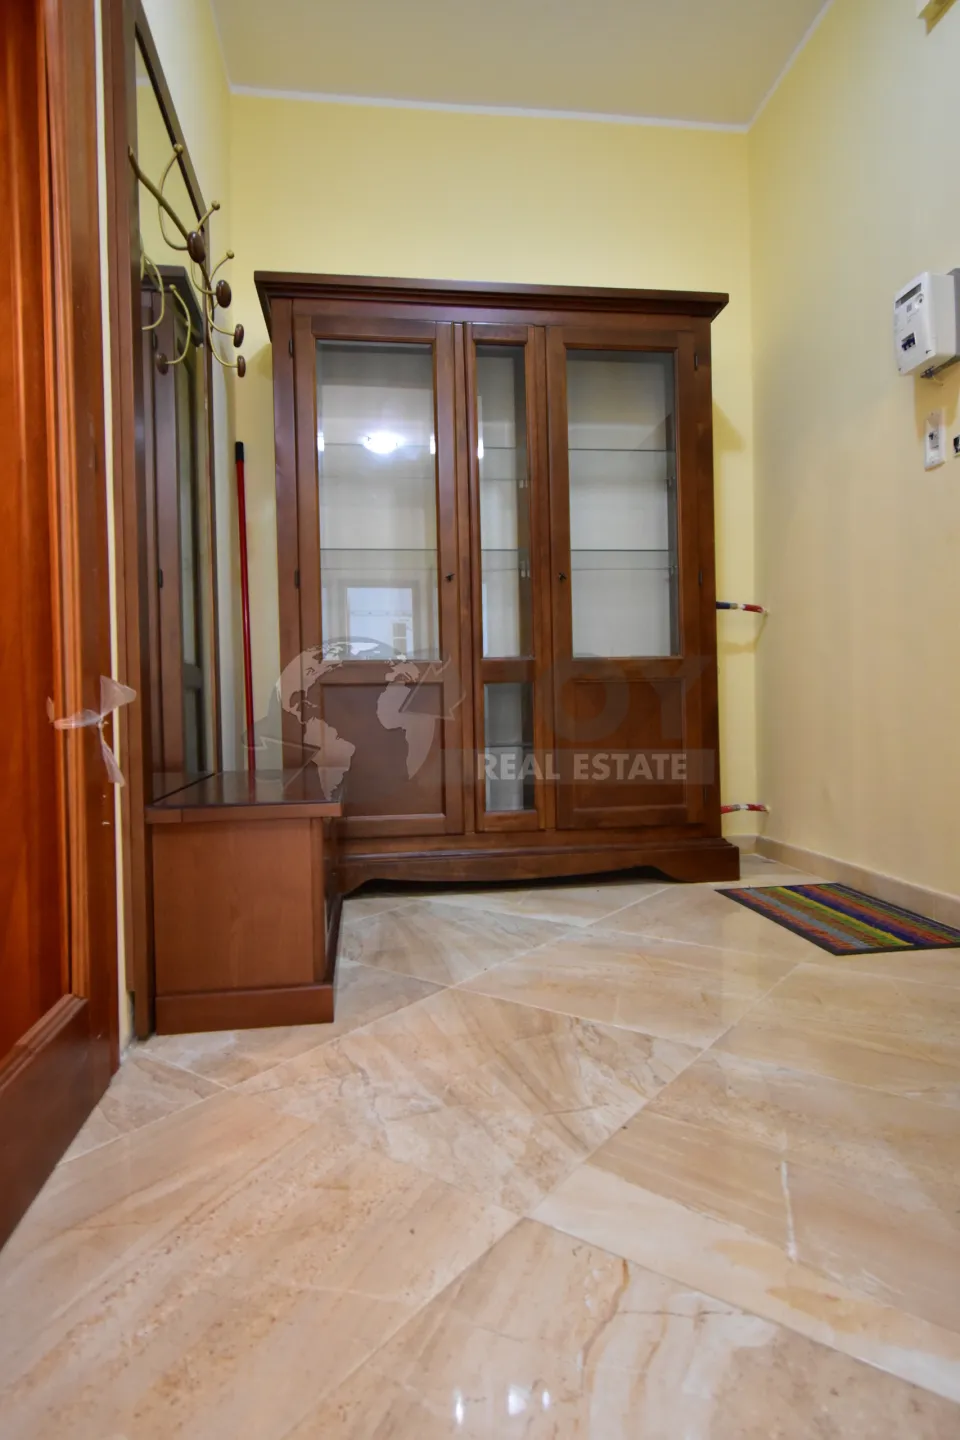 Immagine per Appartamento in vendita a Brindisi via Fanin 90b